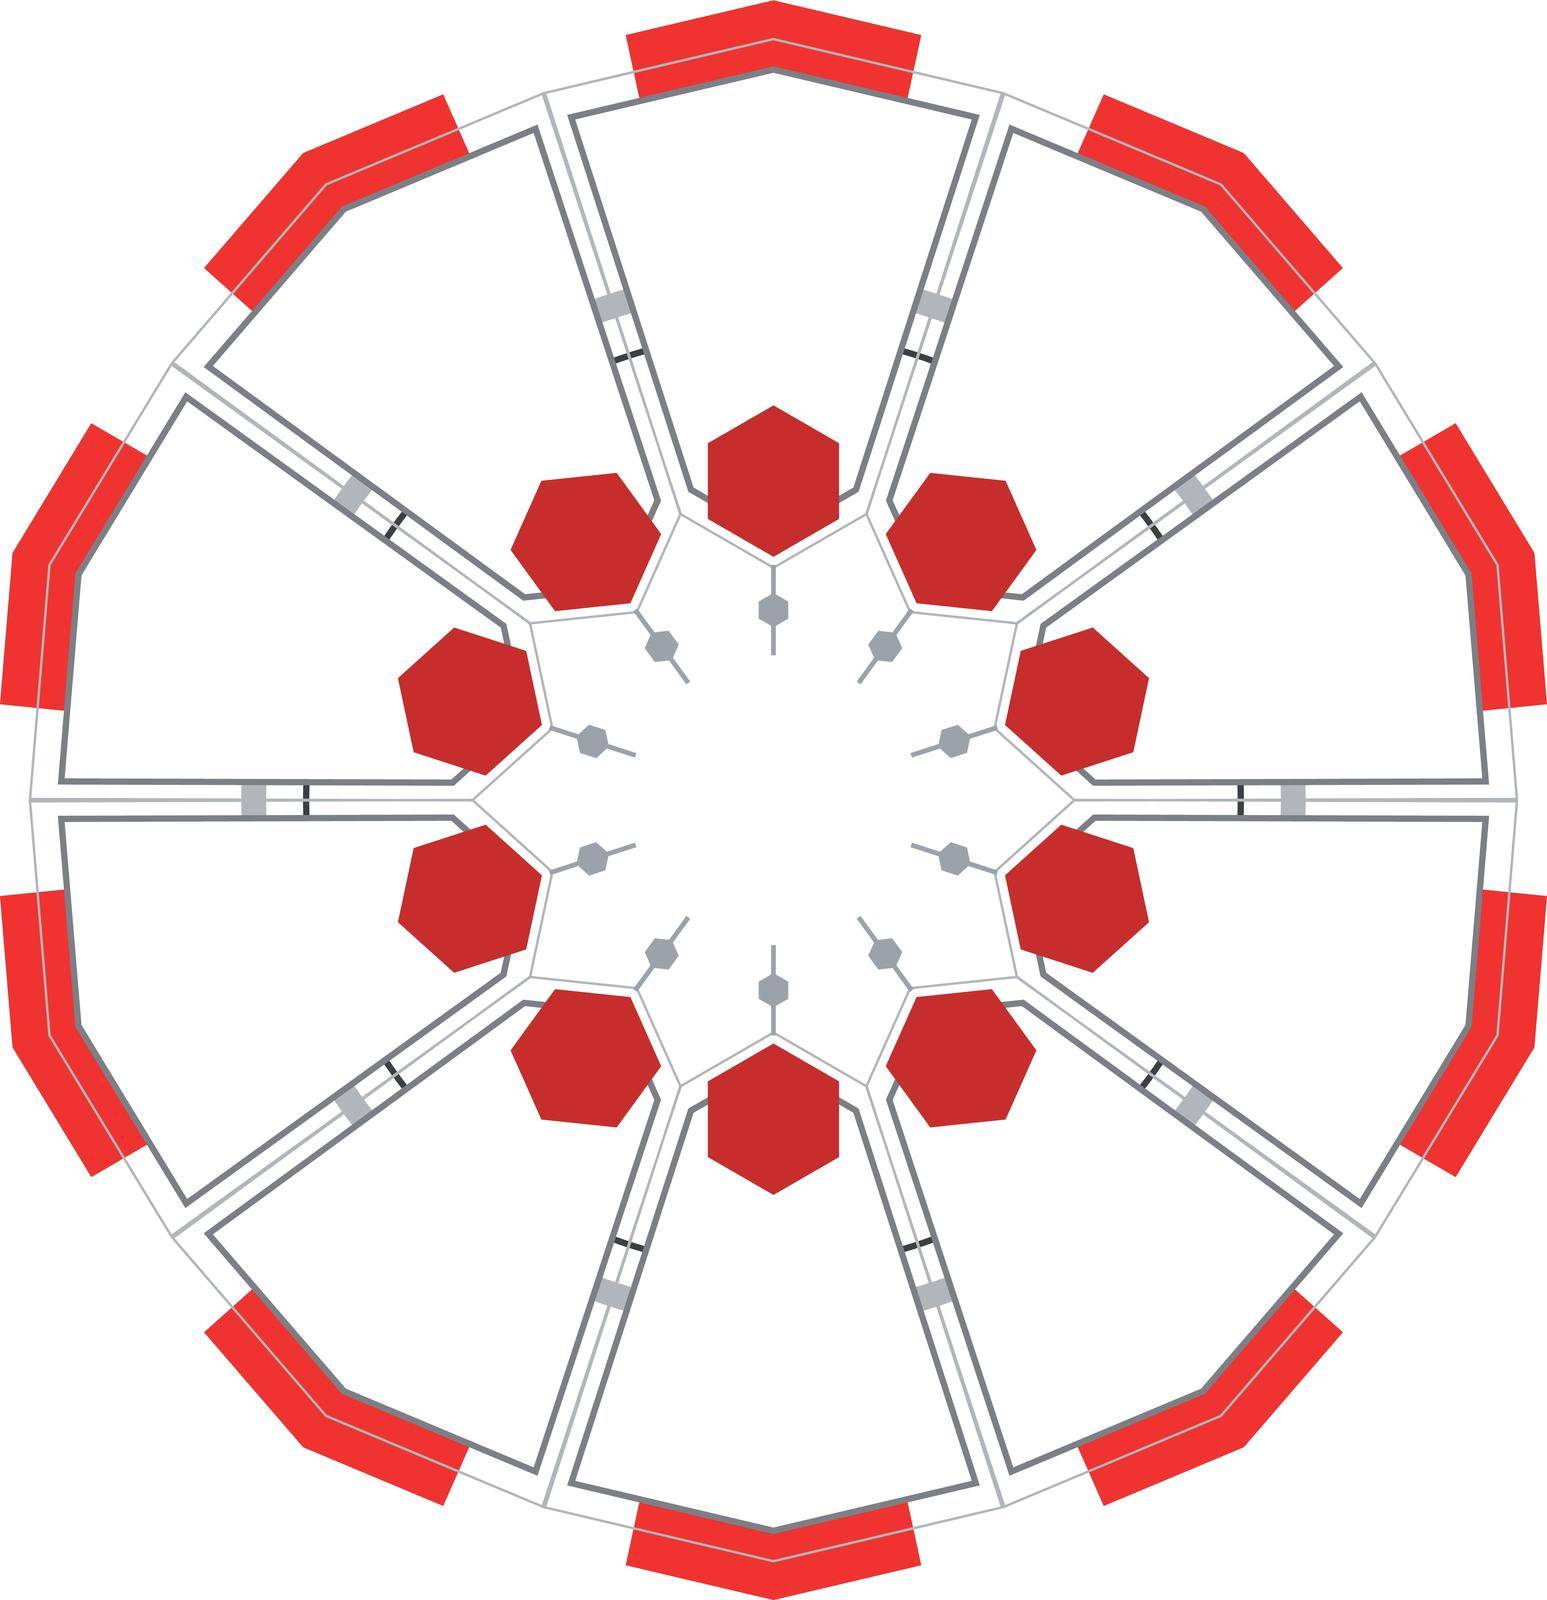 Business ecosystem organisation hexagone diagram scheme template by kisika